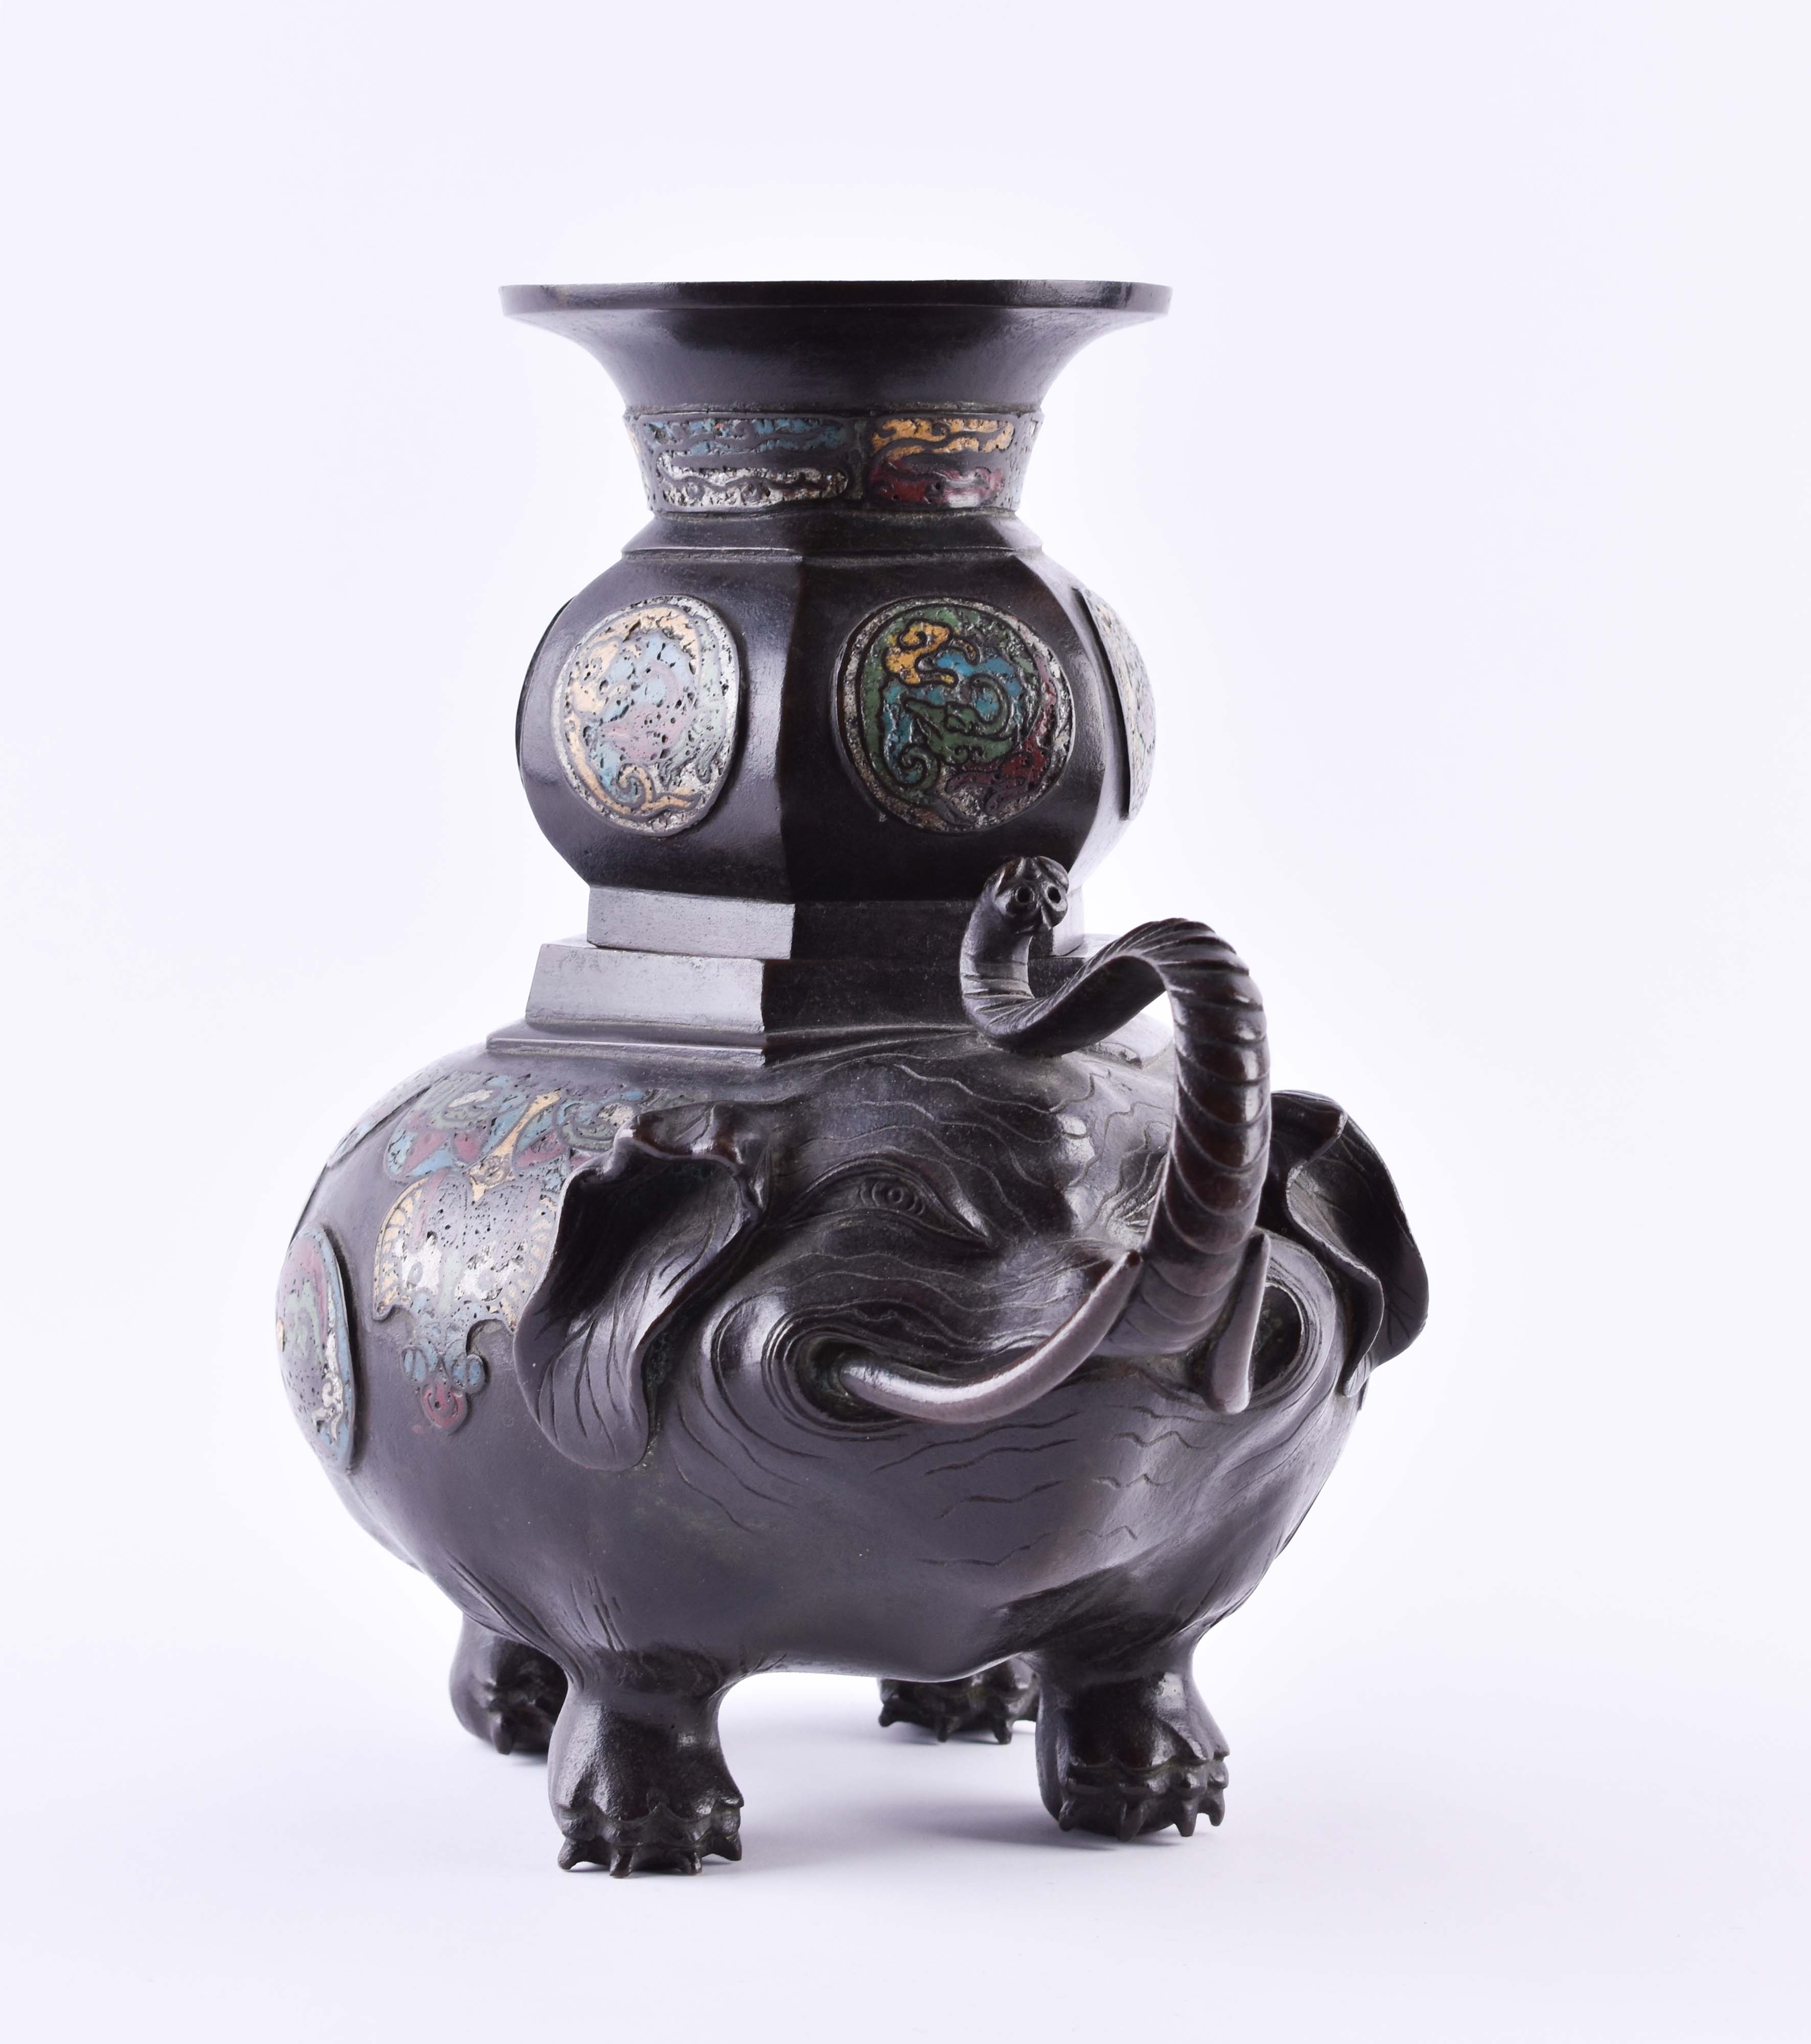  Figurative cloisonne Koro China Qing dynasty - Image 6 of 10